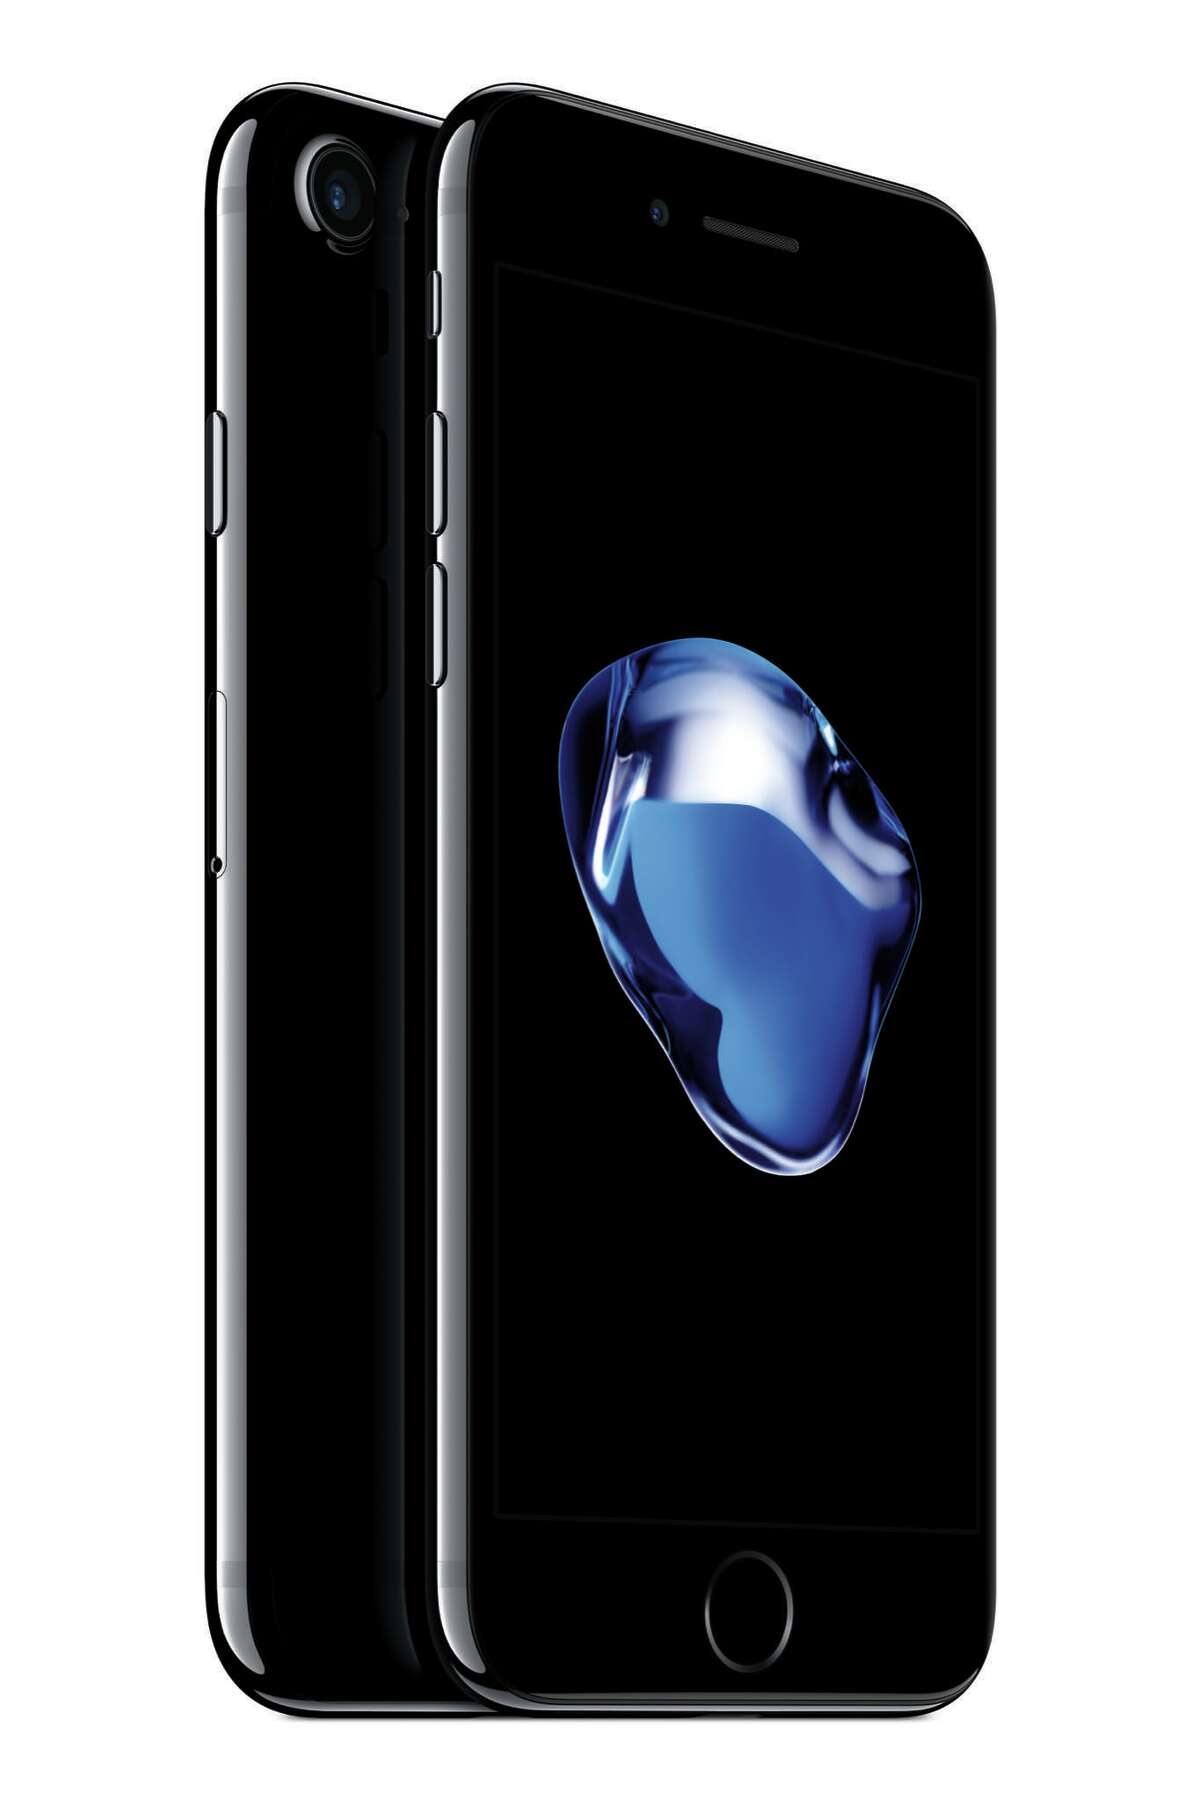 Apple's iPhone 7 in Jet Black.